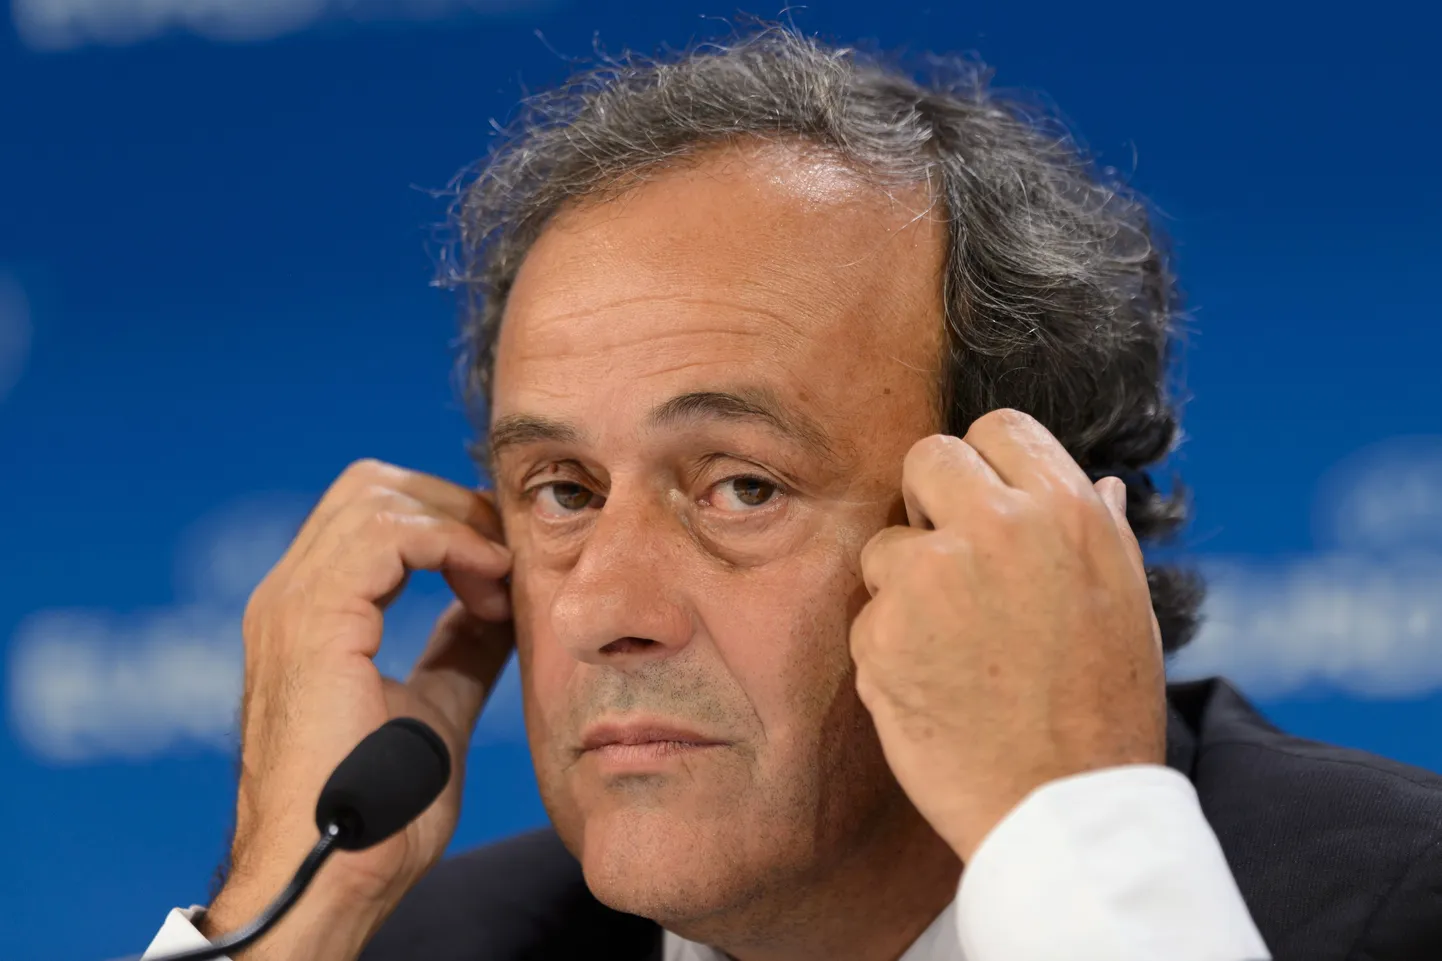 UEFA president Michel Platini.